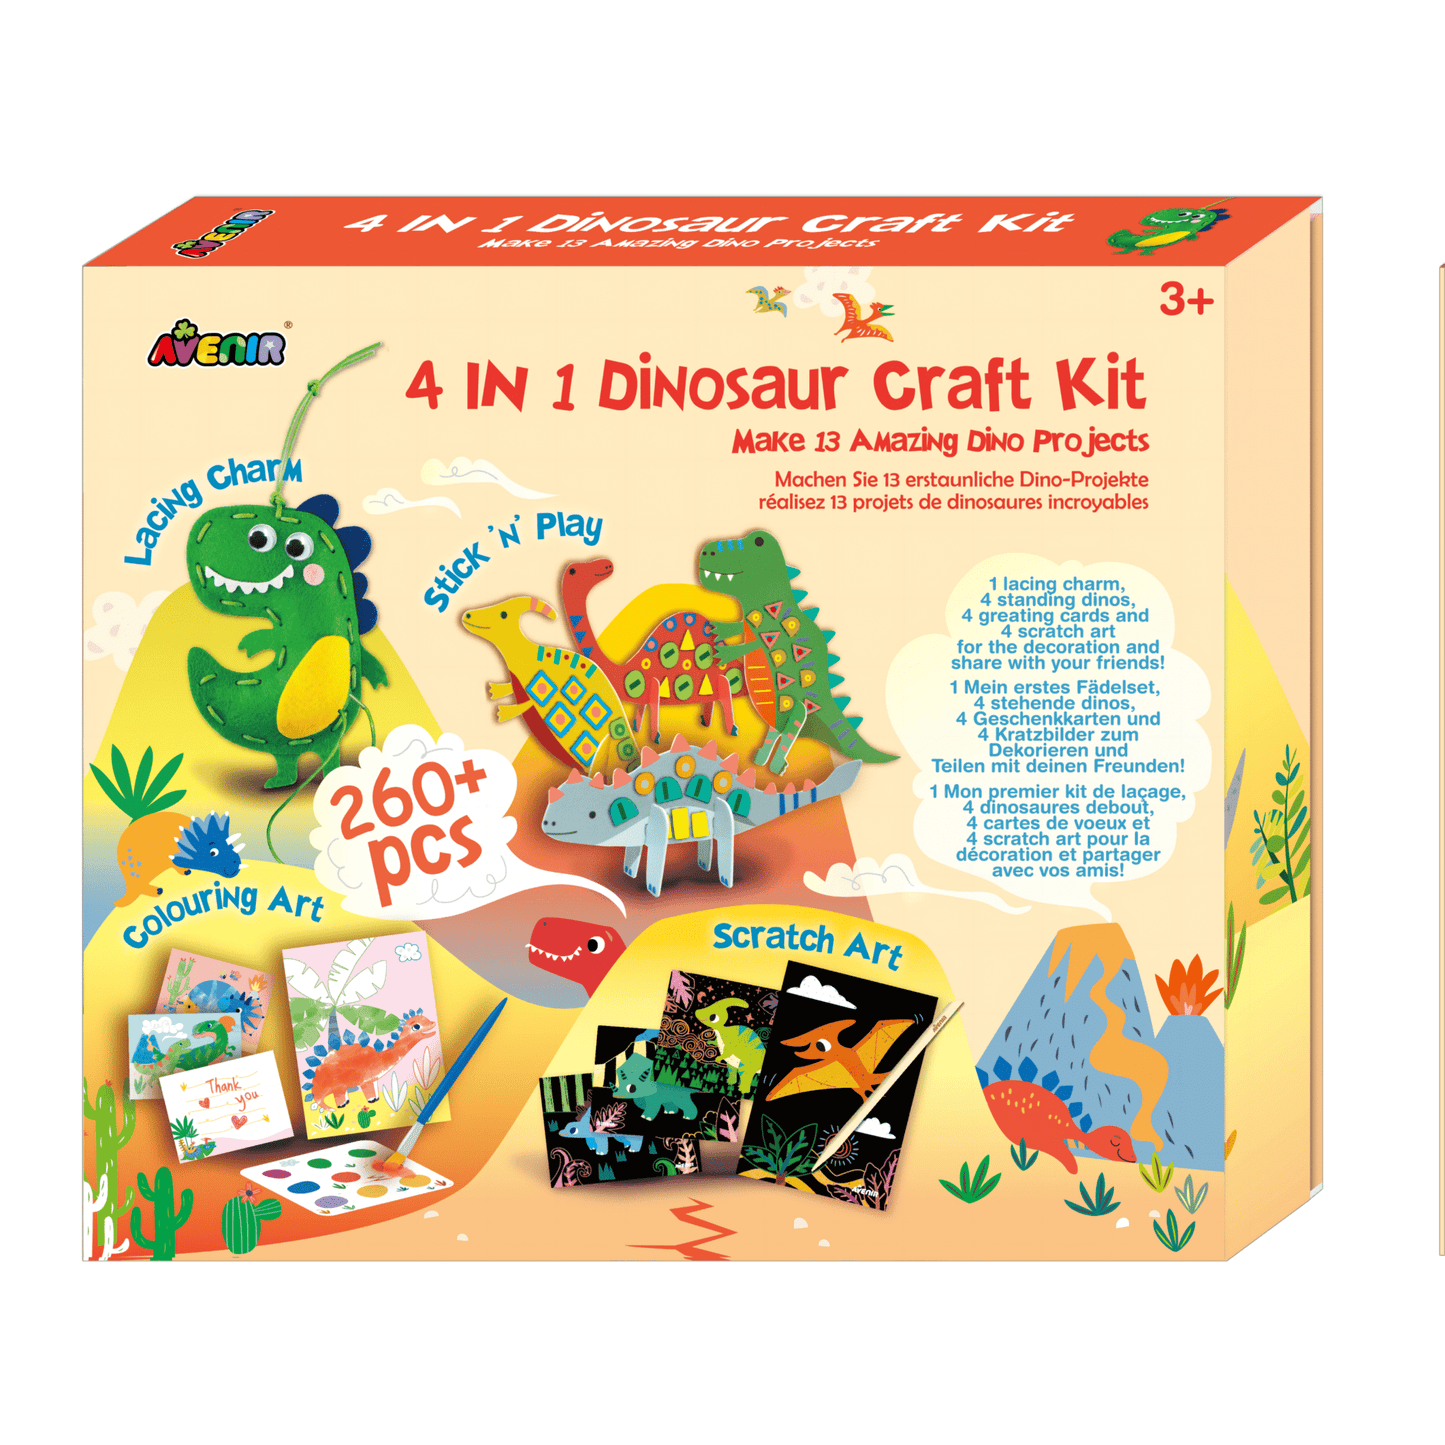 4 in 1 Dinosaur Craft Kit